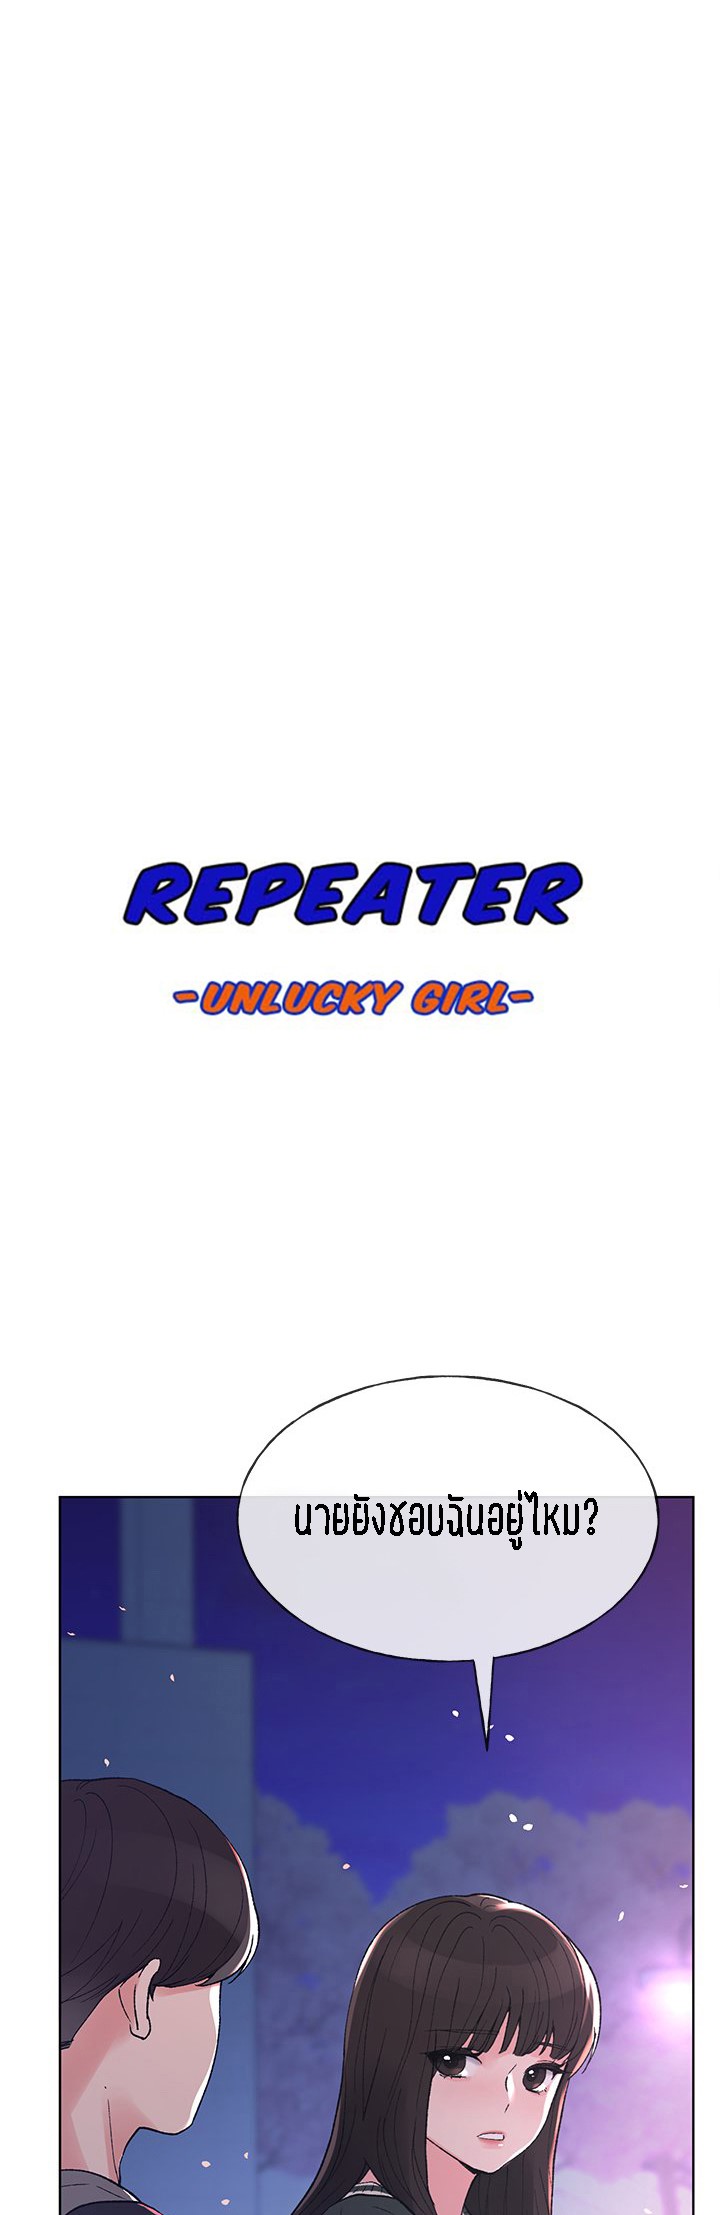 Repeater 56 01